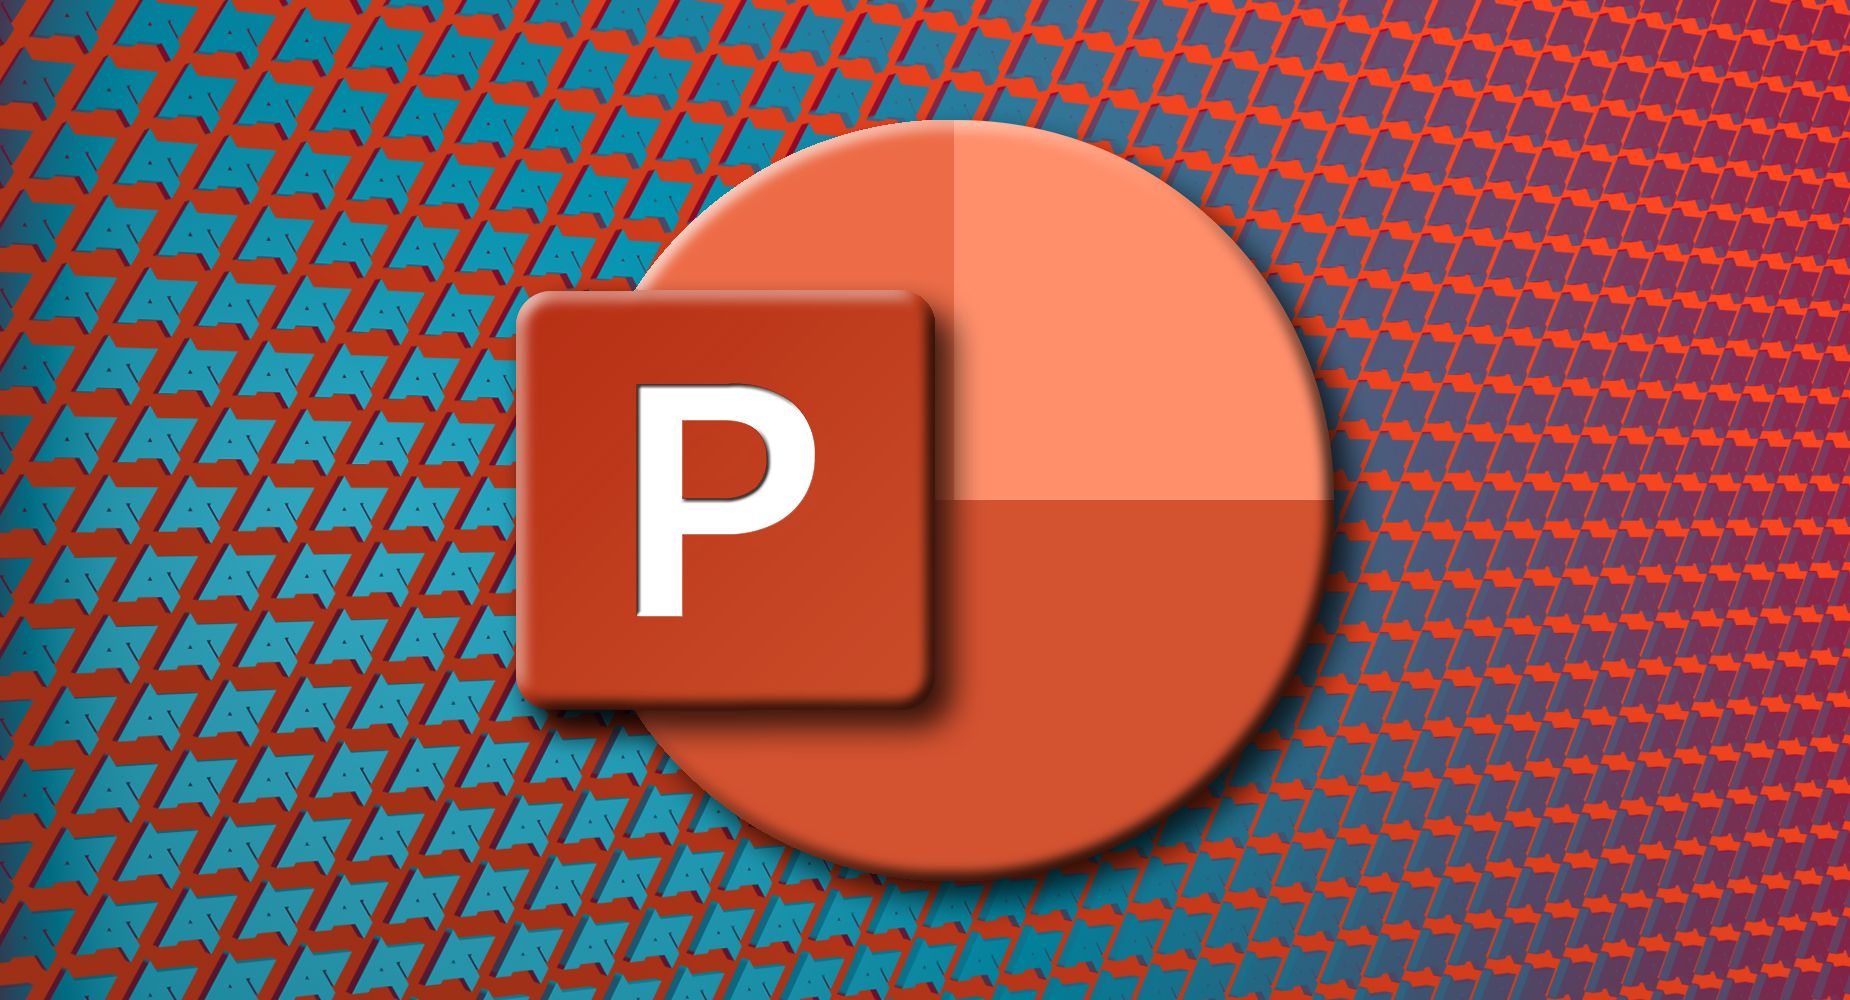 PowerPoint logo over an array of AP logos